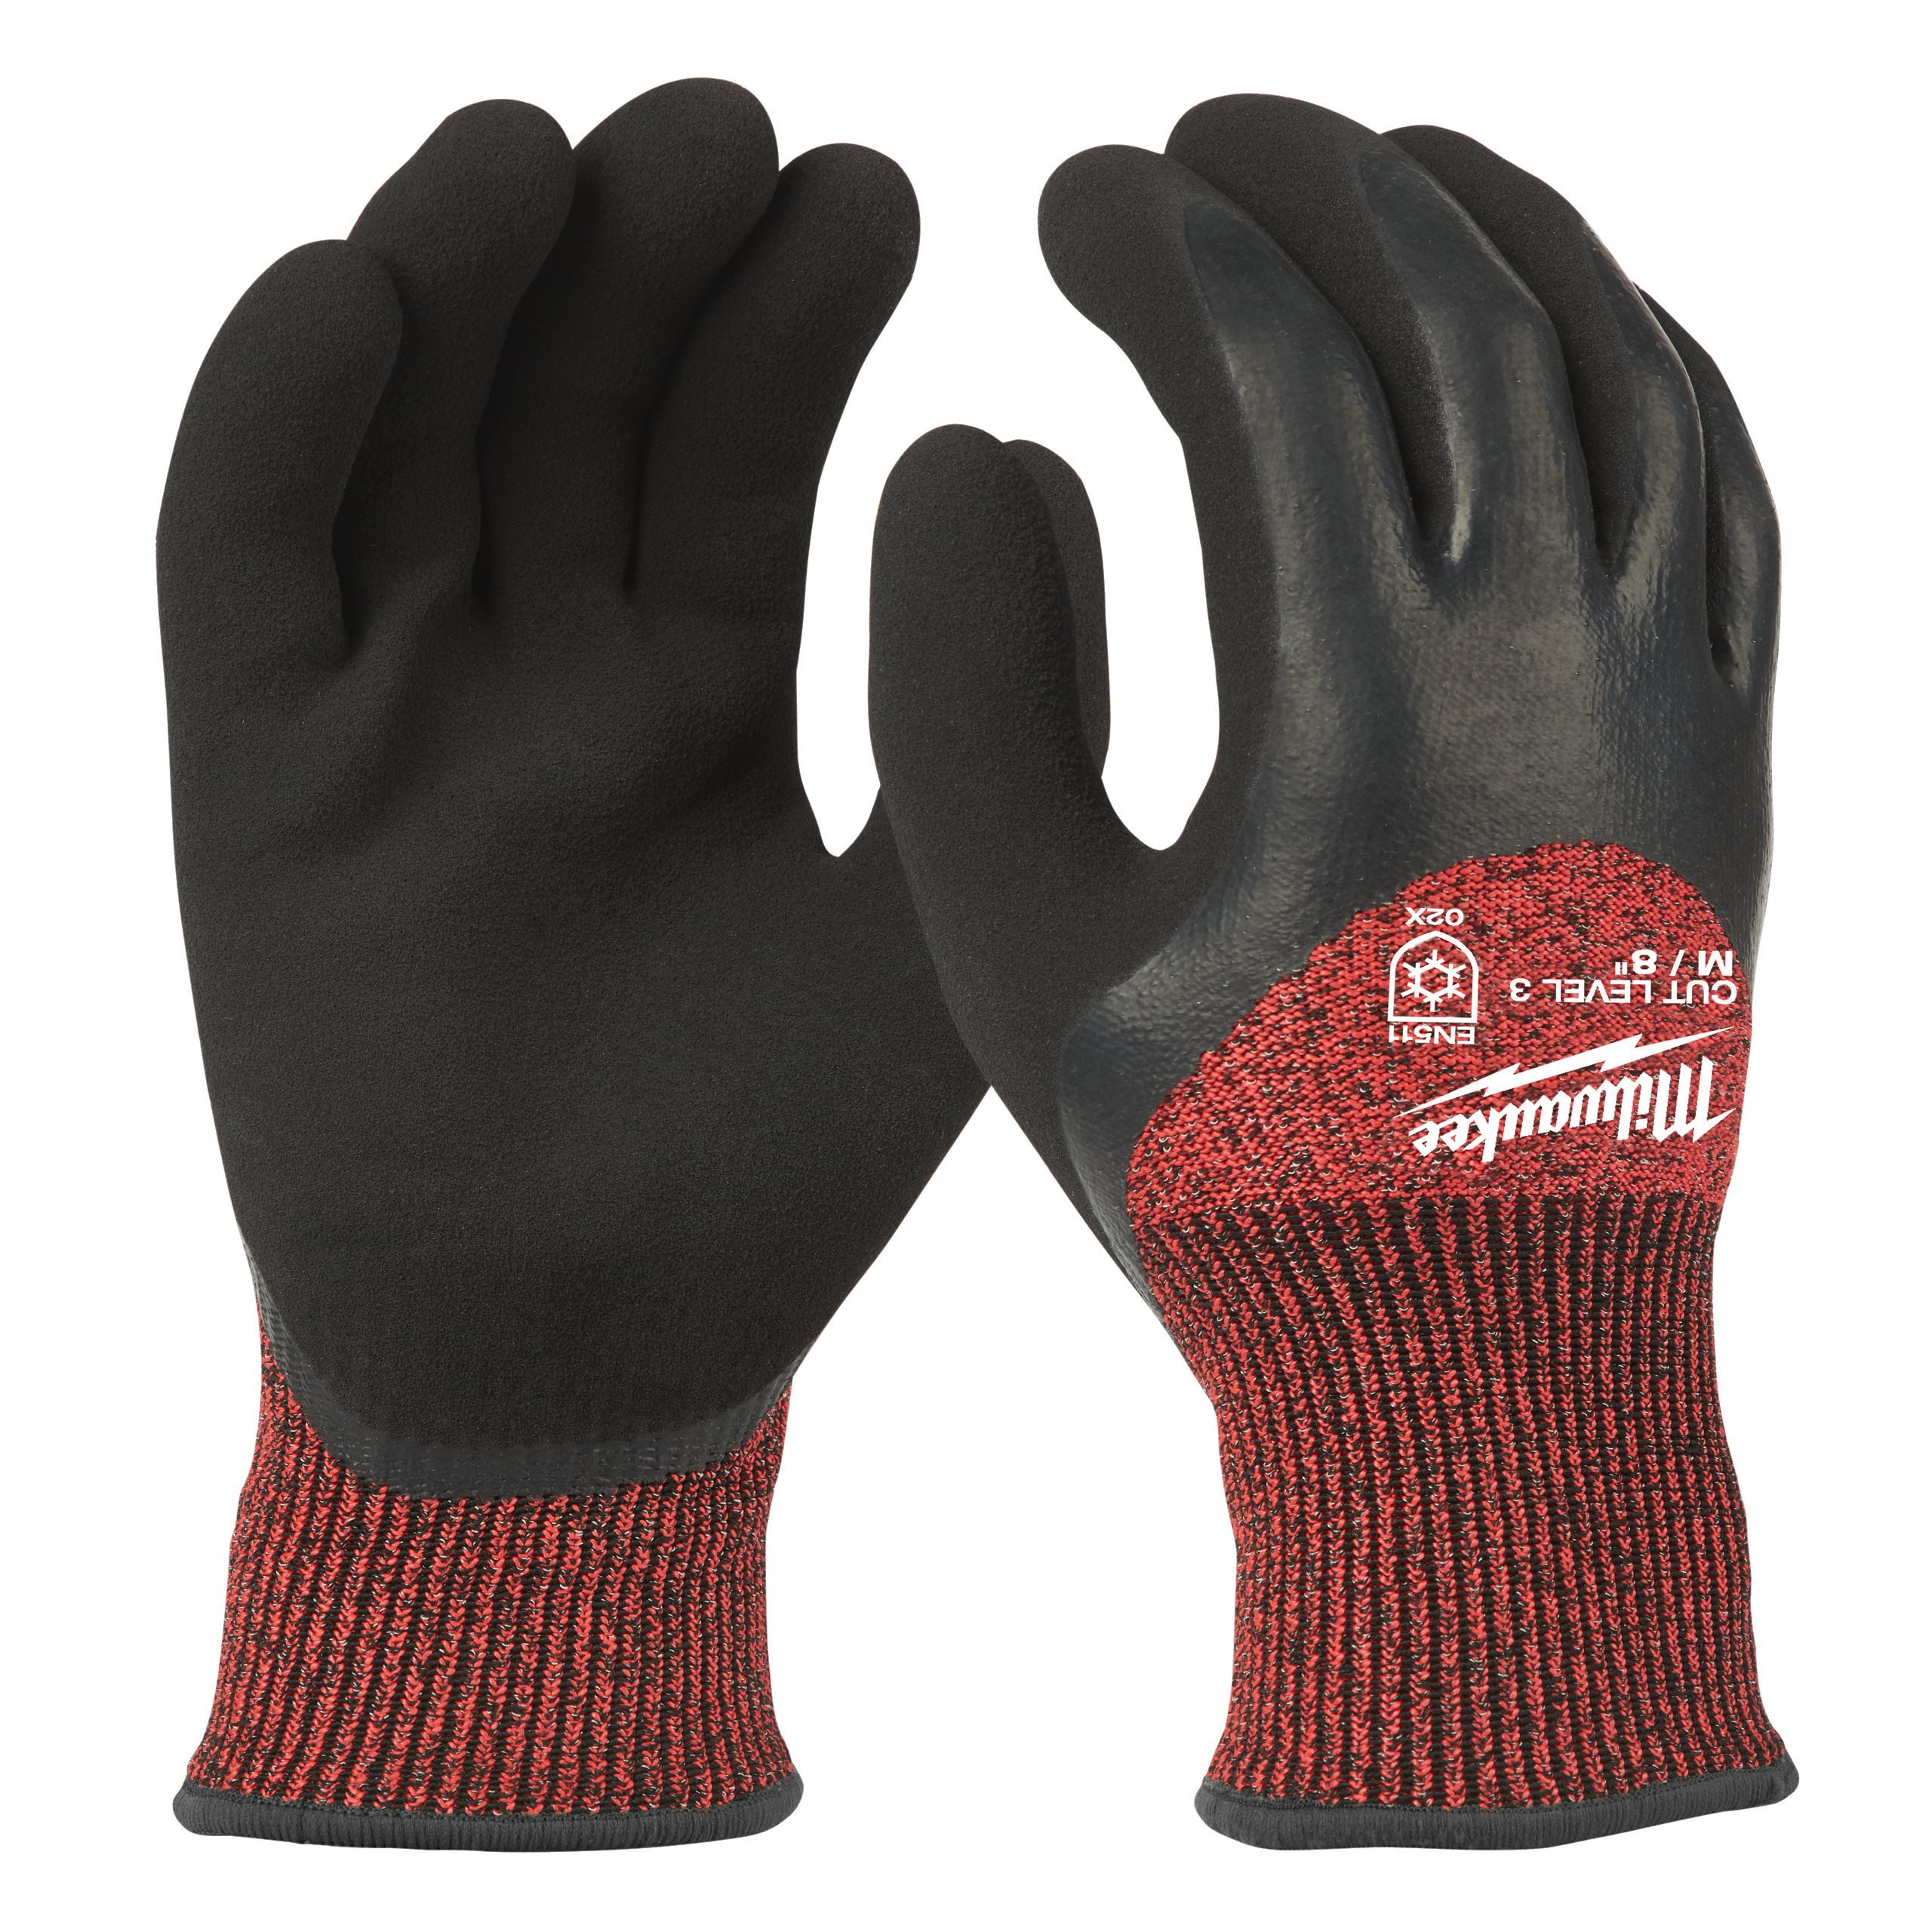 2XL Fingerless Work Gloves Heavy Duty Reinforced Palms Black/Gray Milwaukee 